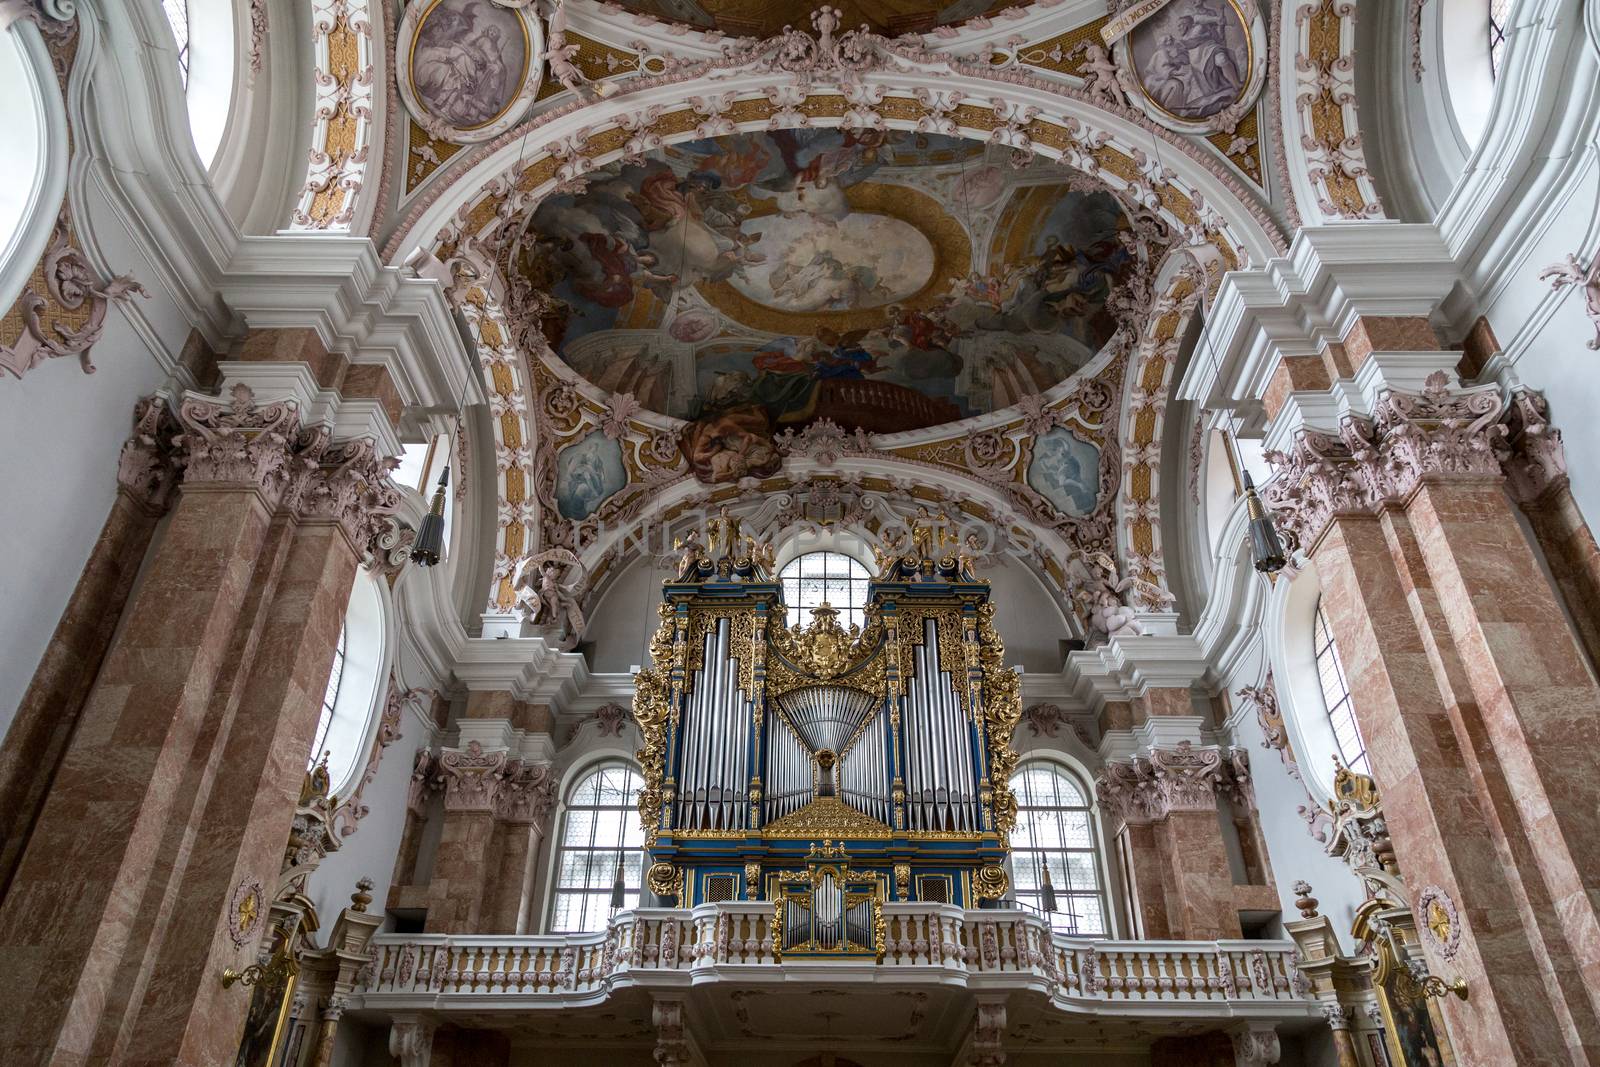 Innsbruck, Austria - June 8, 2018: Pipe organ and ceiling painting inside Innsbruck Cathedral